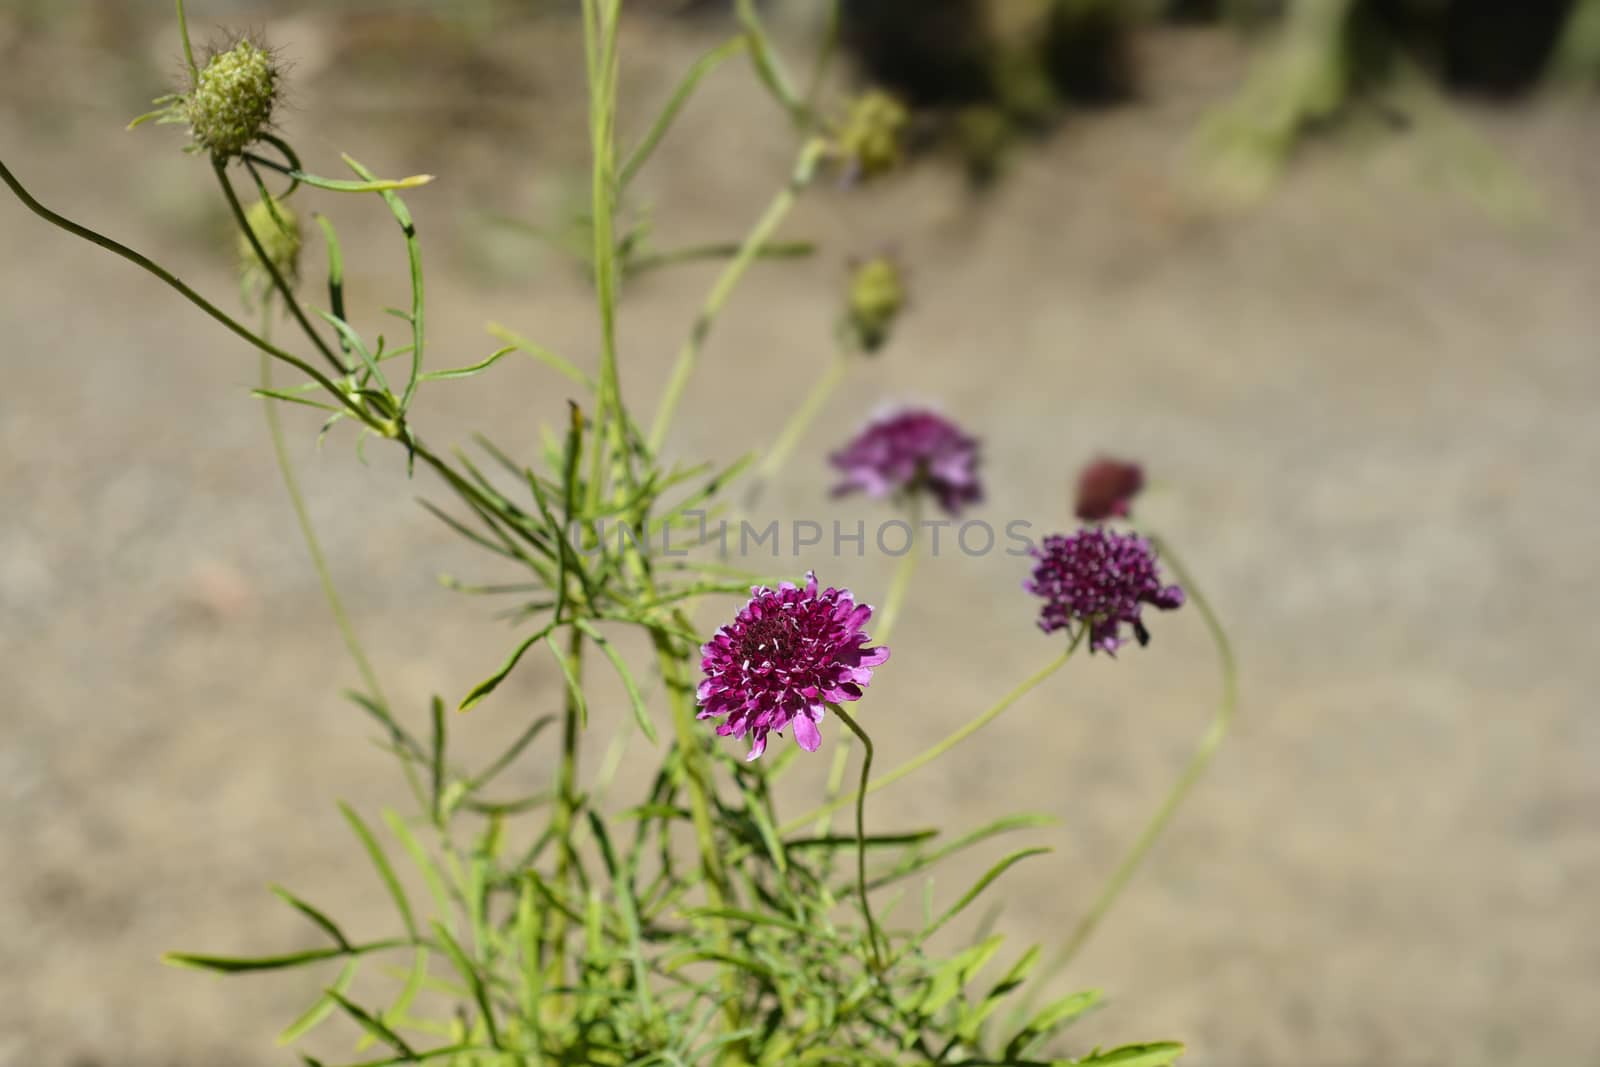 Pincushion flower Beaujolais Bonnets - Latin name - Scabiosa atropurpurea Beaujolais Bonnets